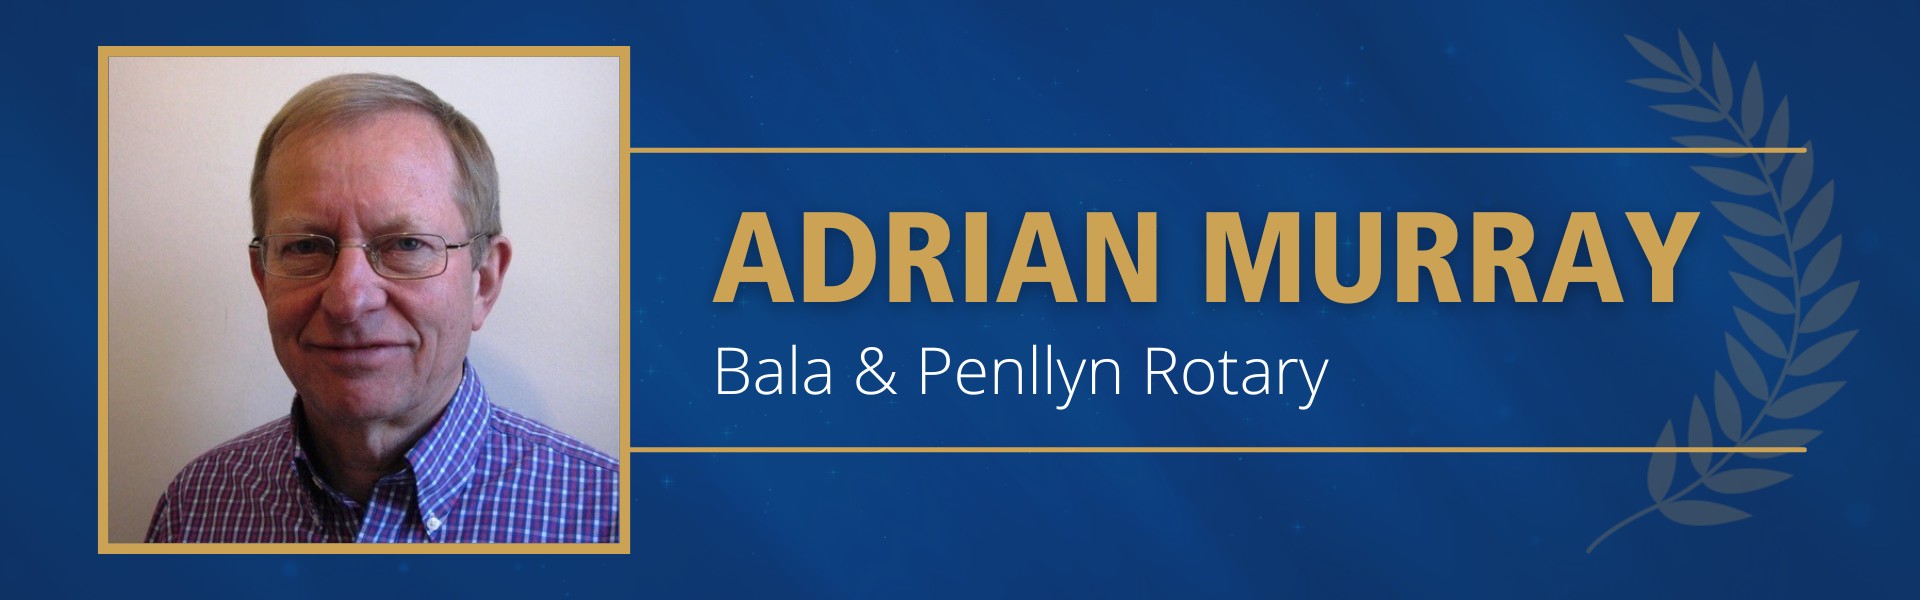 Dr Adrian Murray Bala & Penllyn Rotary